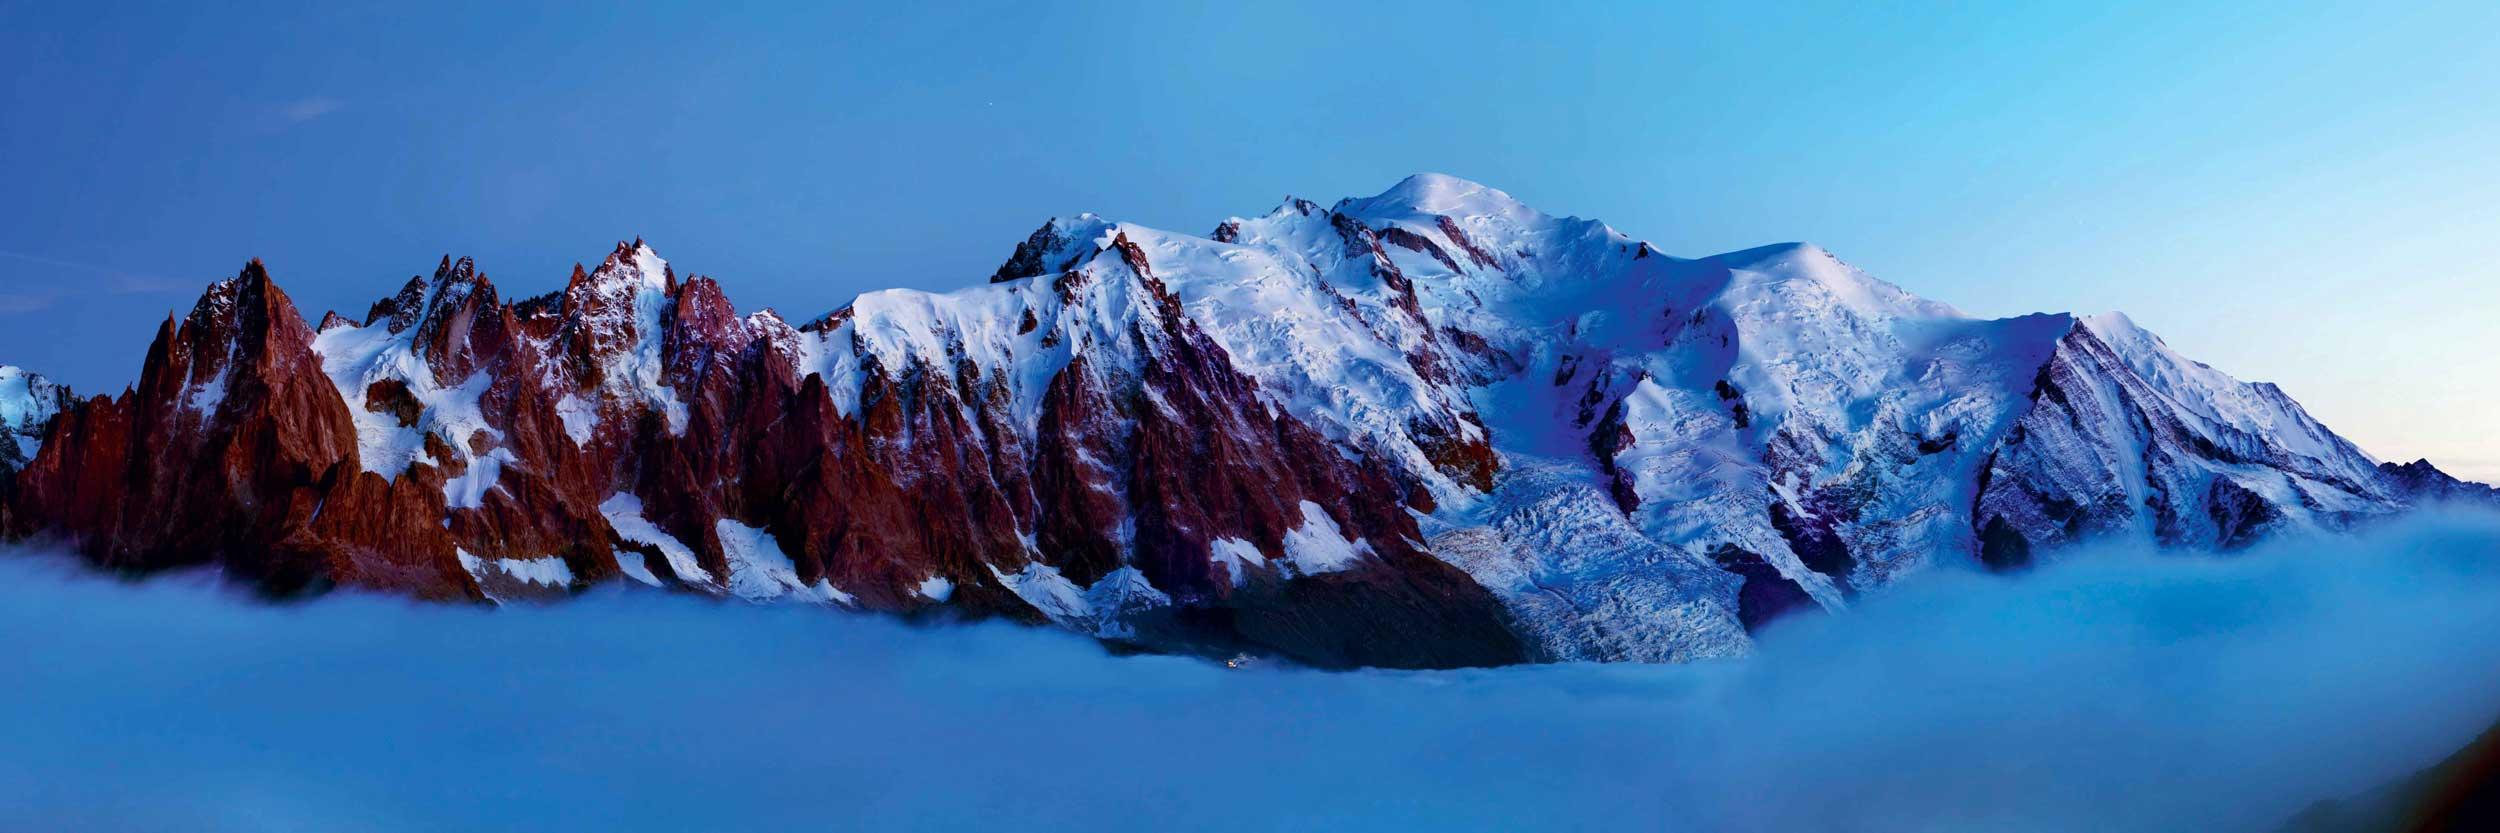 WWF Mont Blanc